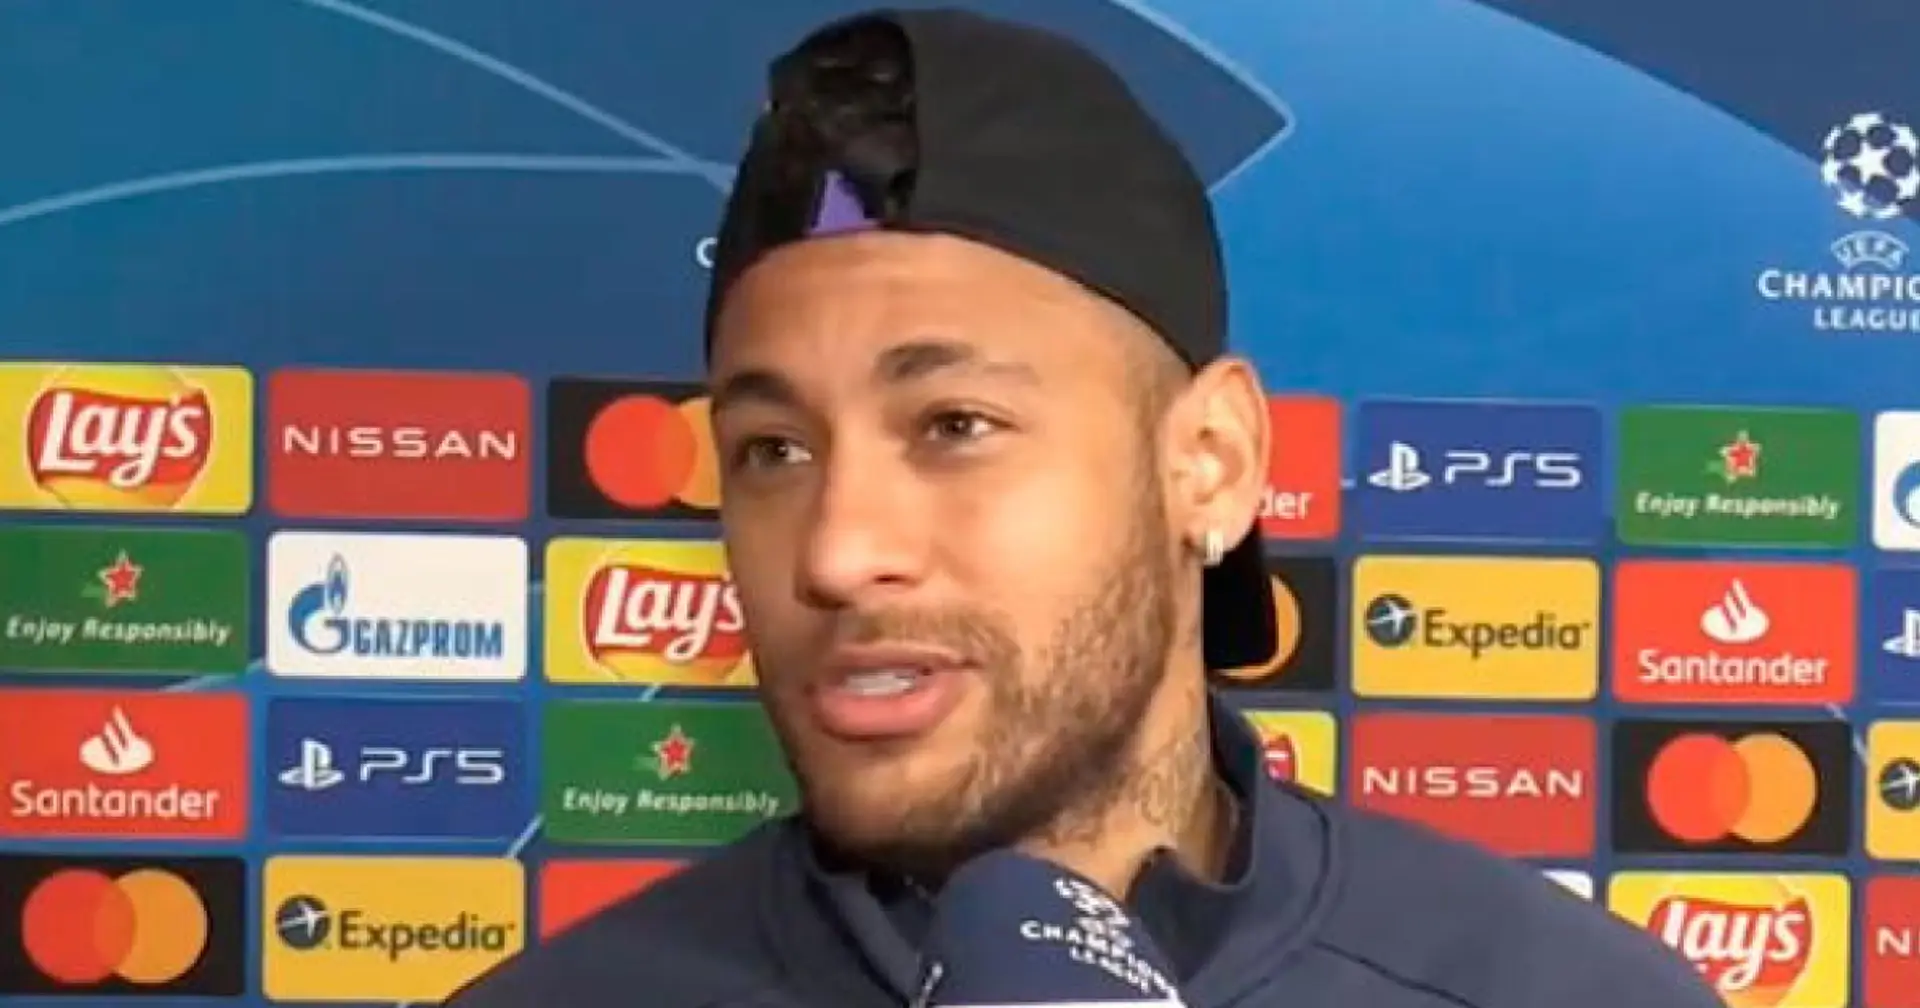 Neymar pushing for Barca comeback, club may consider loan move (reliability: 4 stars)